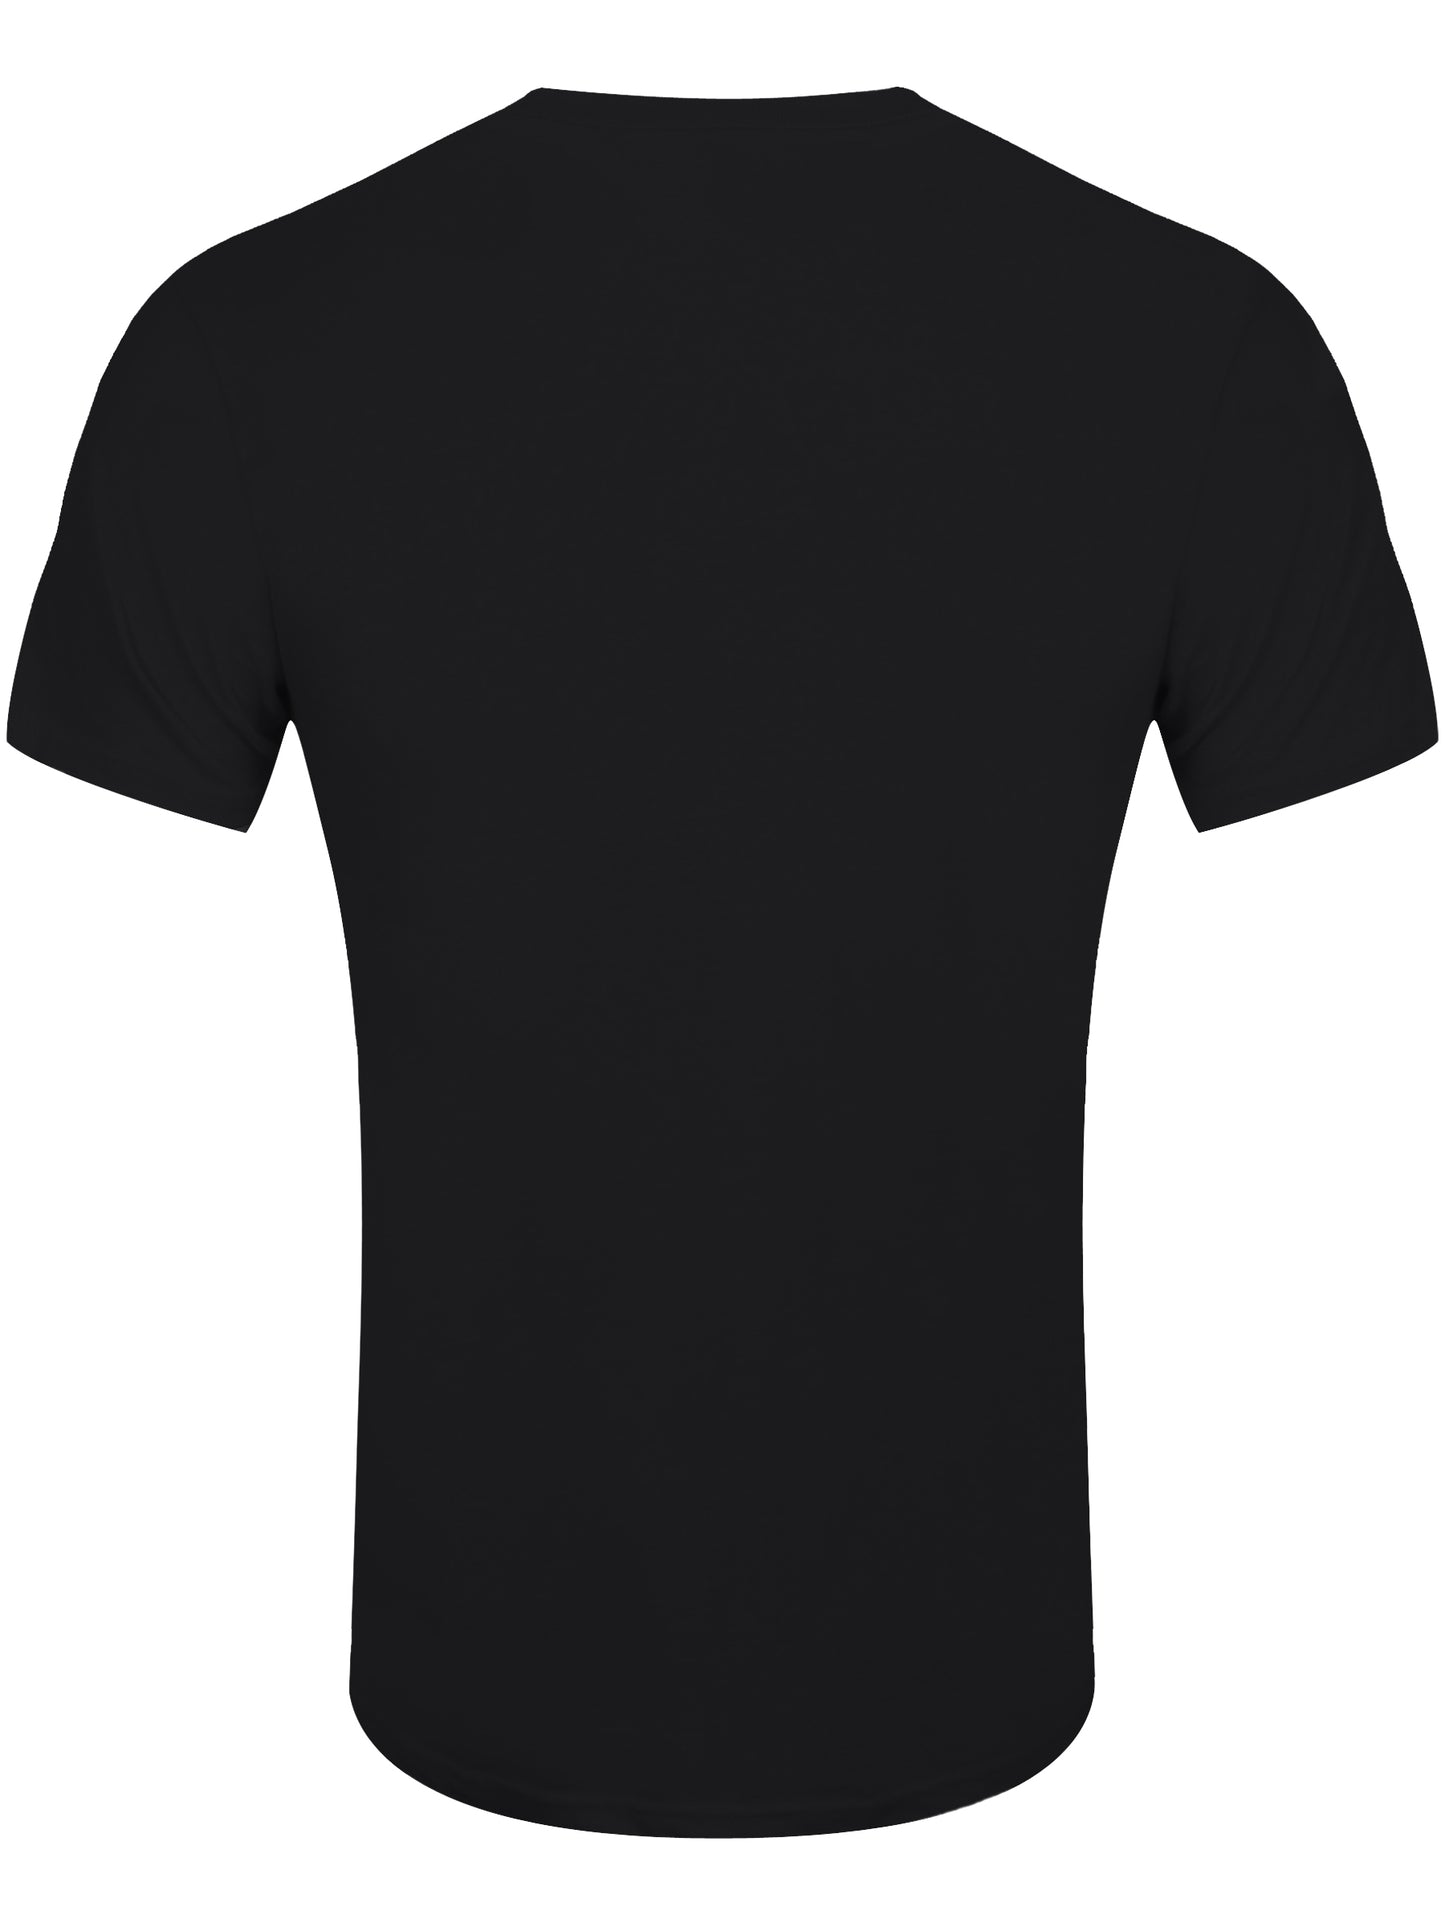 Birds Of Prey Silhouette Men's Black T-Shirt